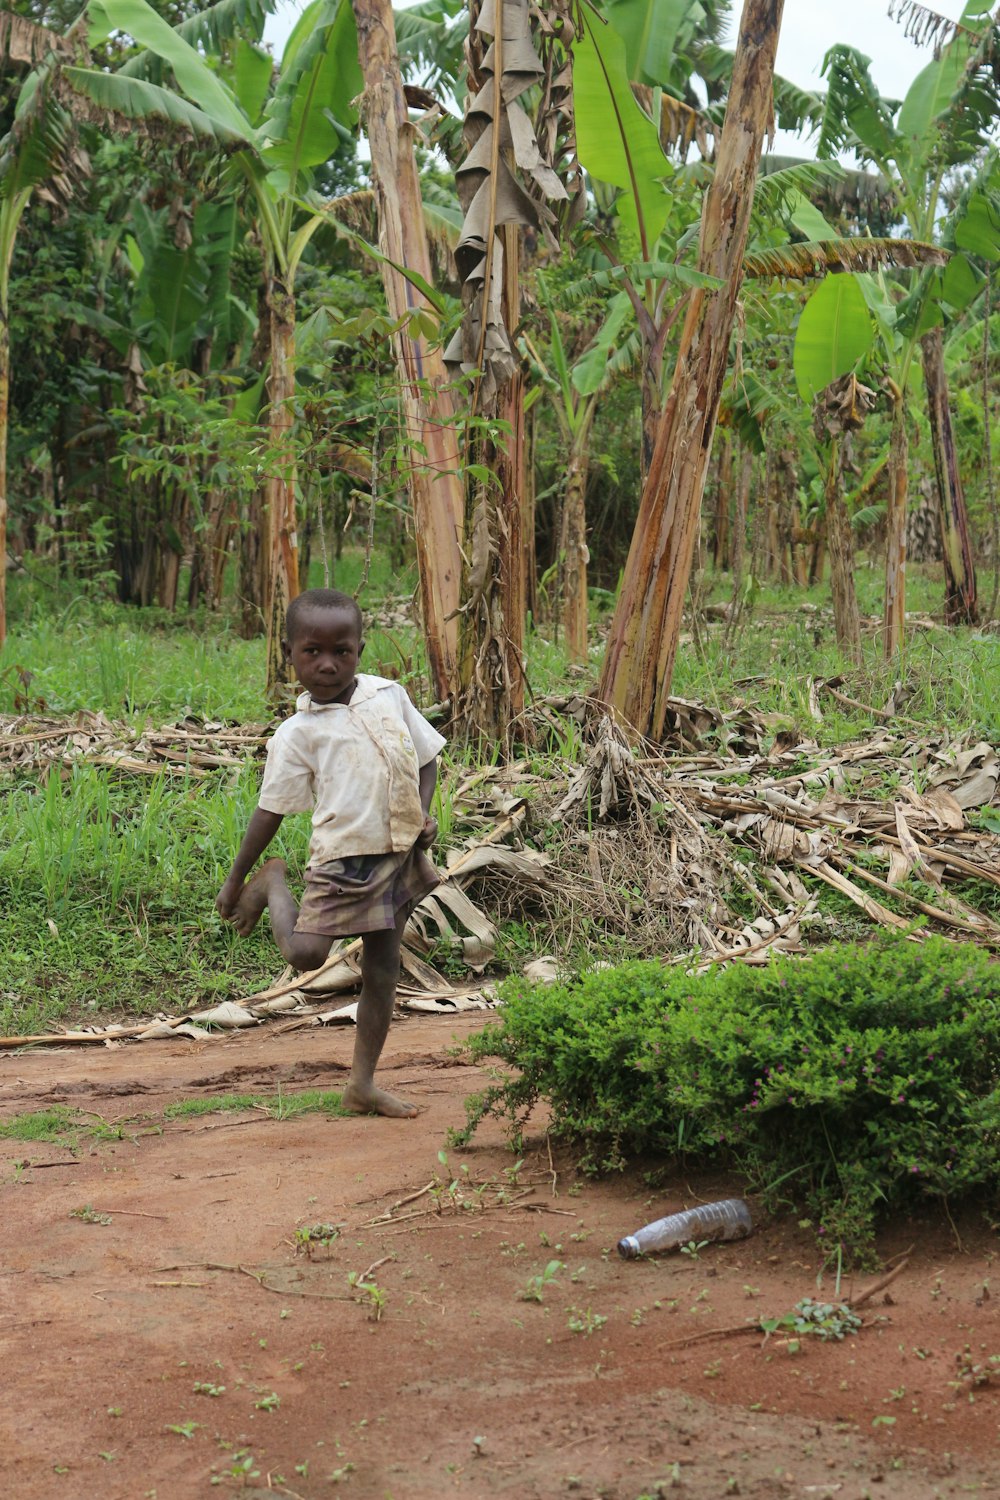 a young boy walking across a dirt road